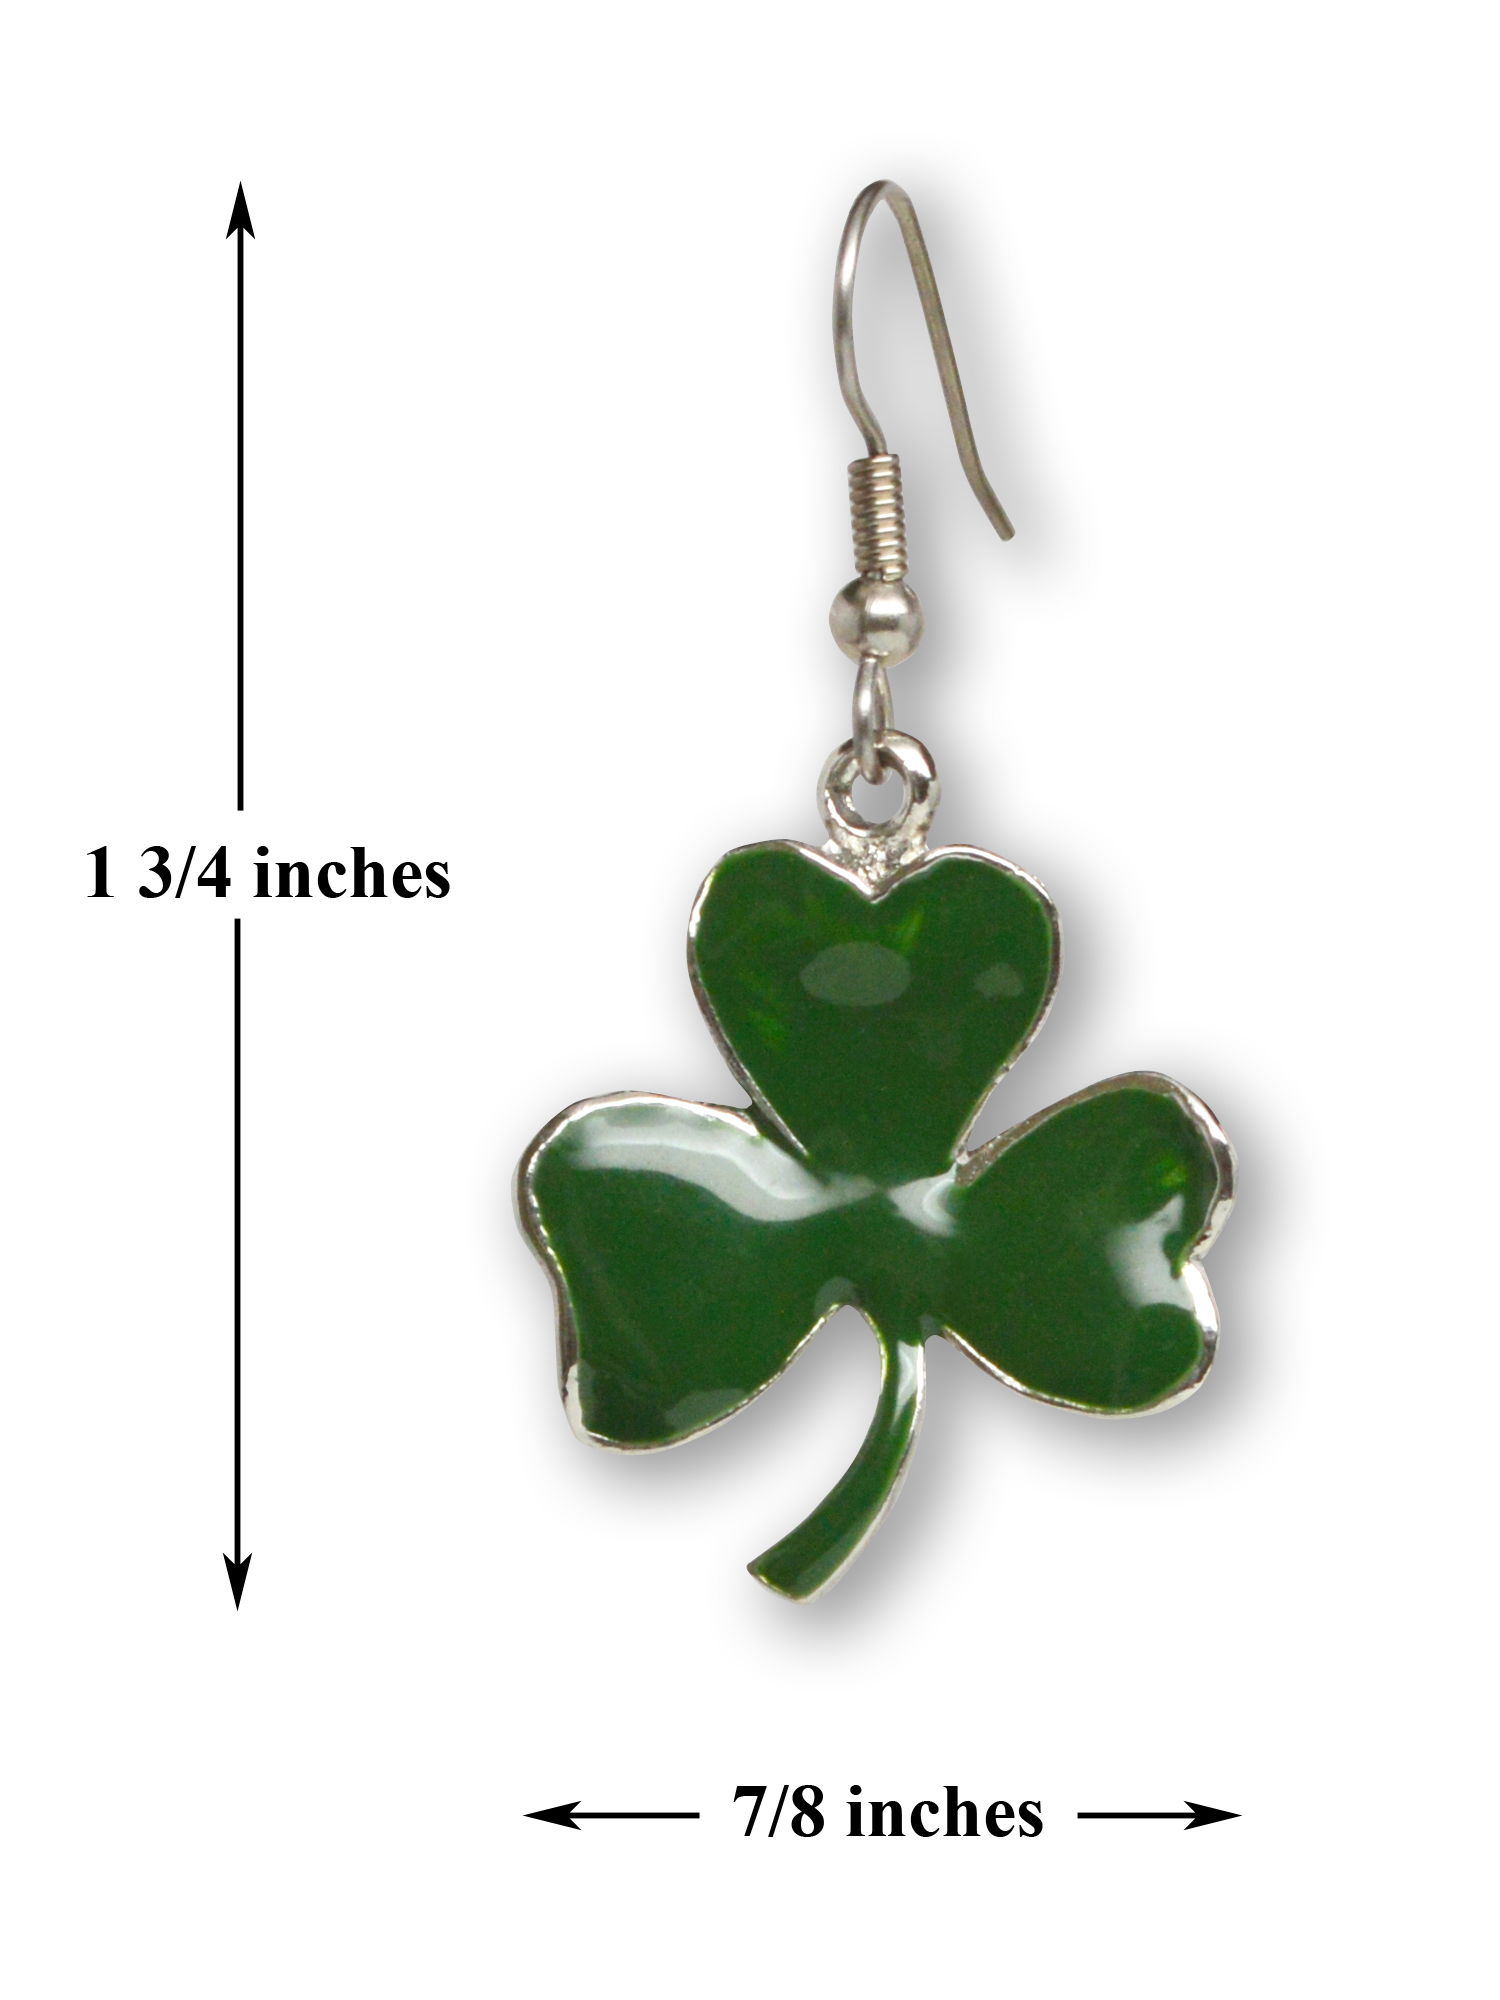 St. Patrick's Day Irish Shamrock Dangle Earrings Green Enamel Silver Finish Pewter Real Metal #1037 - image 3 of 6